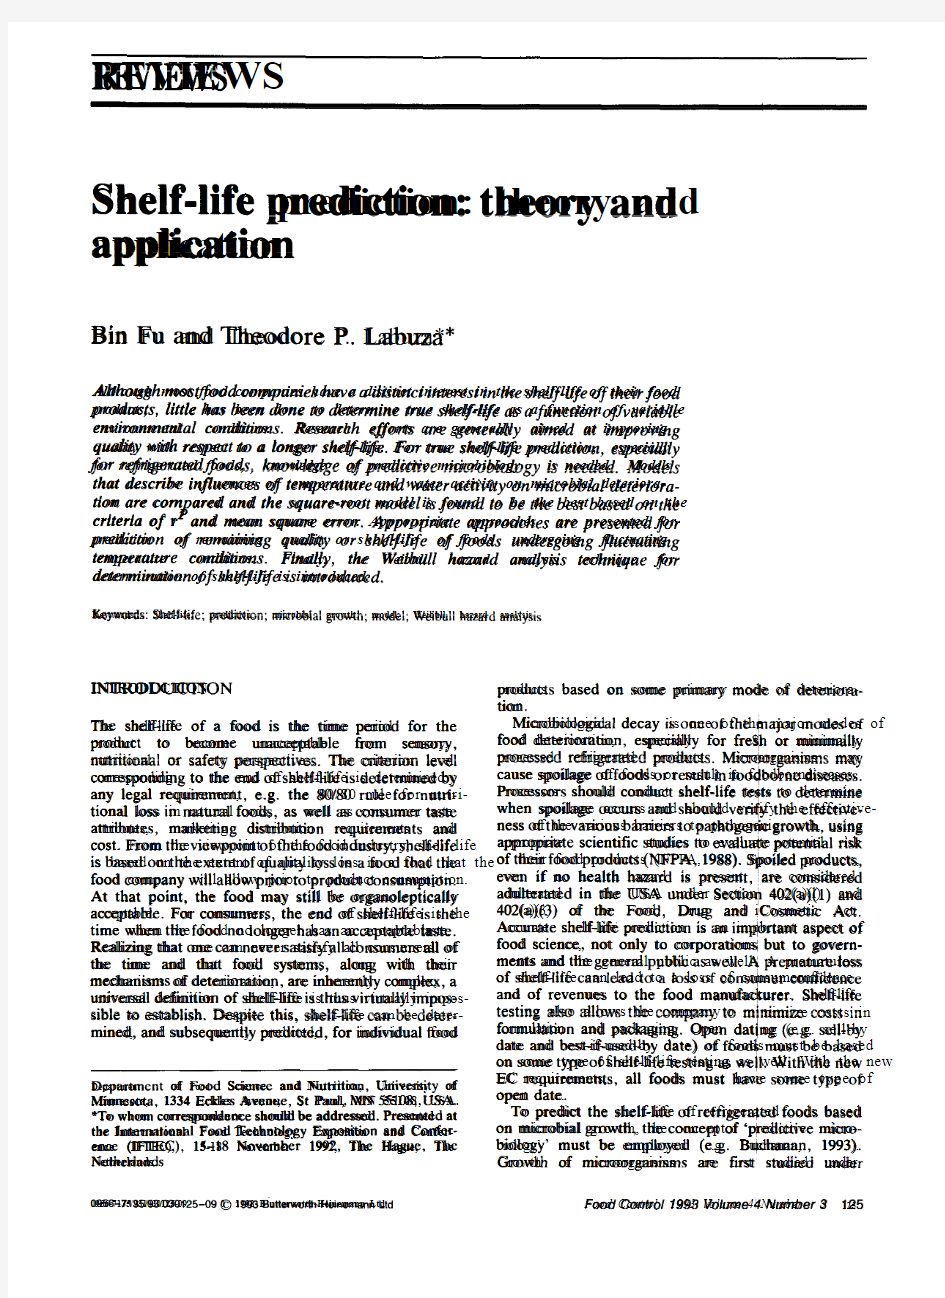 1993Shelf-life prediction theory andapplication